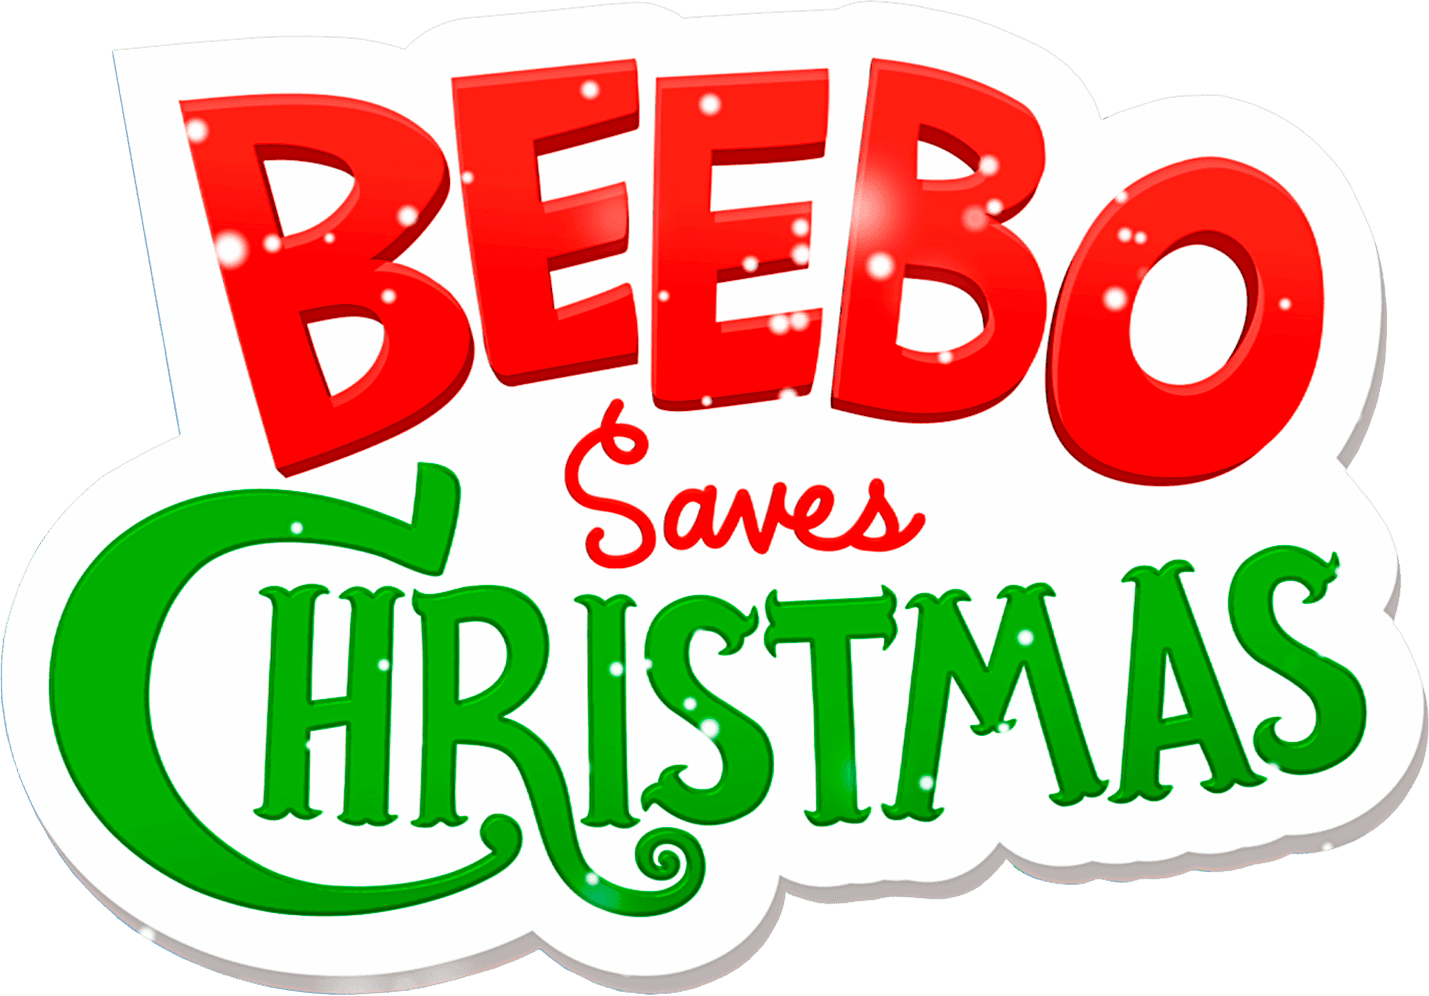 Beebo Saves Christmas logo